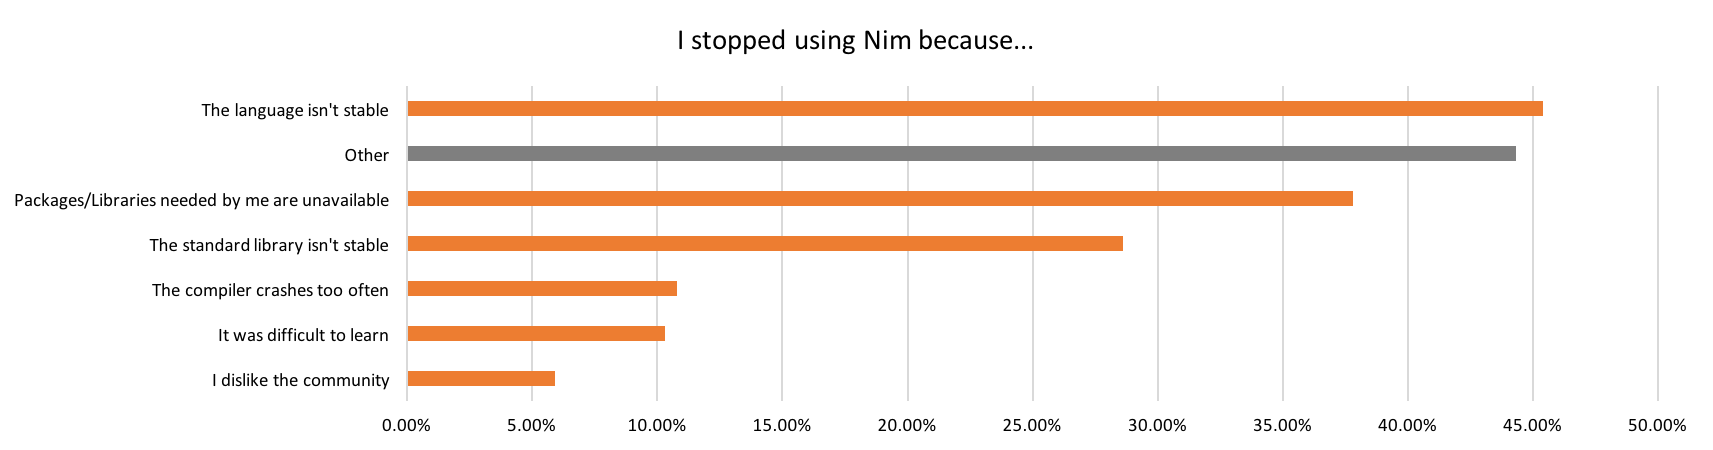 I stopped using Nim because...